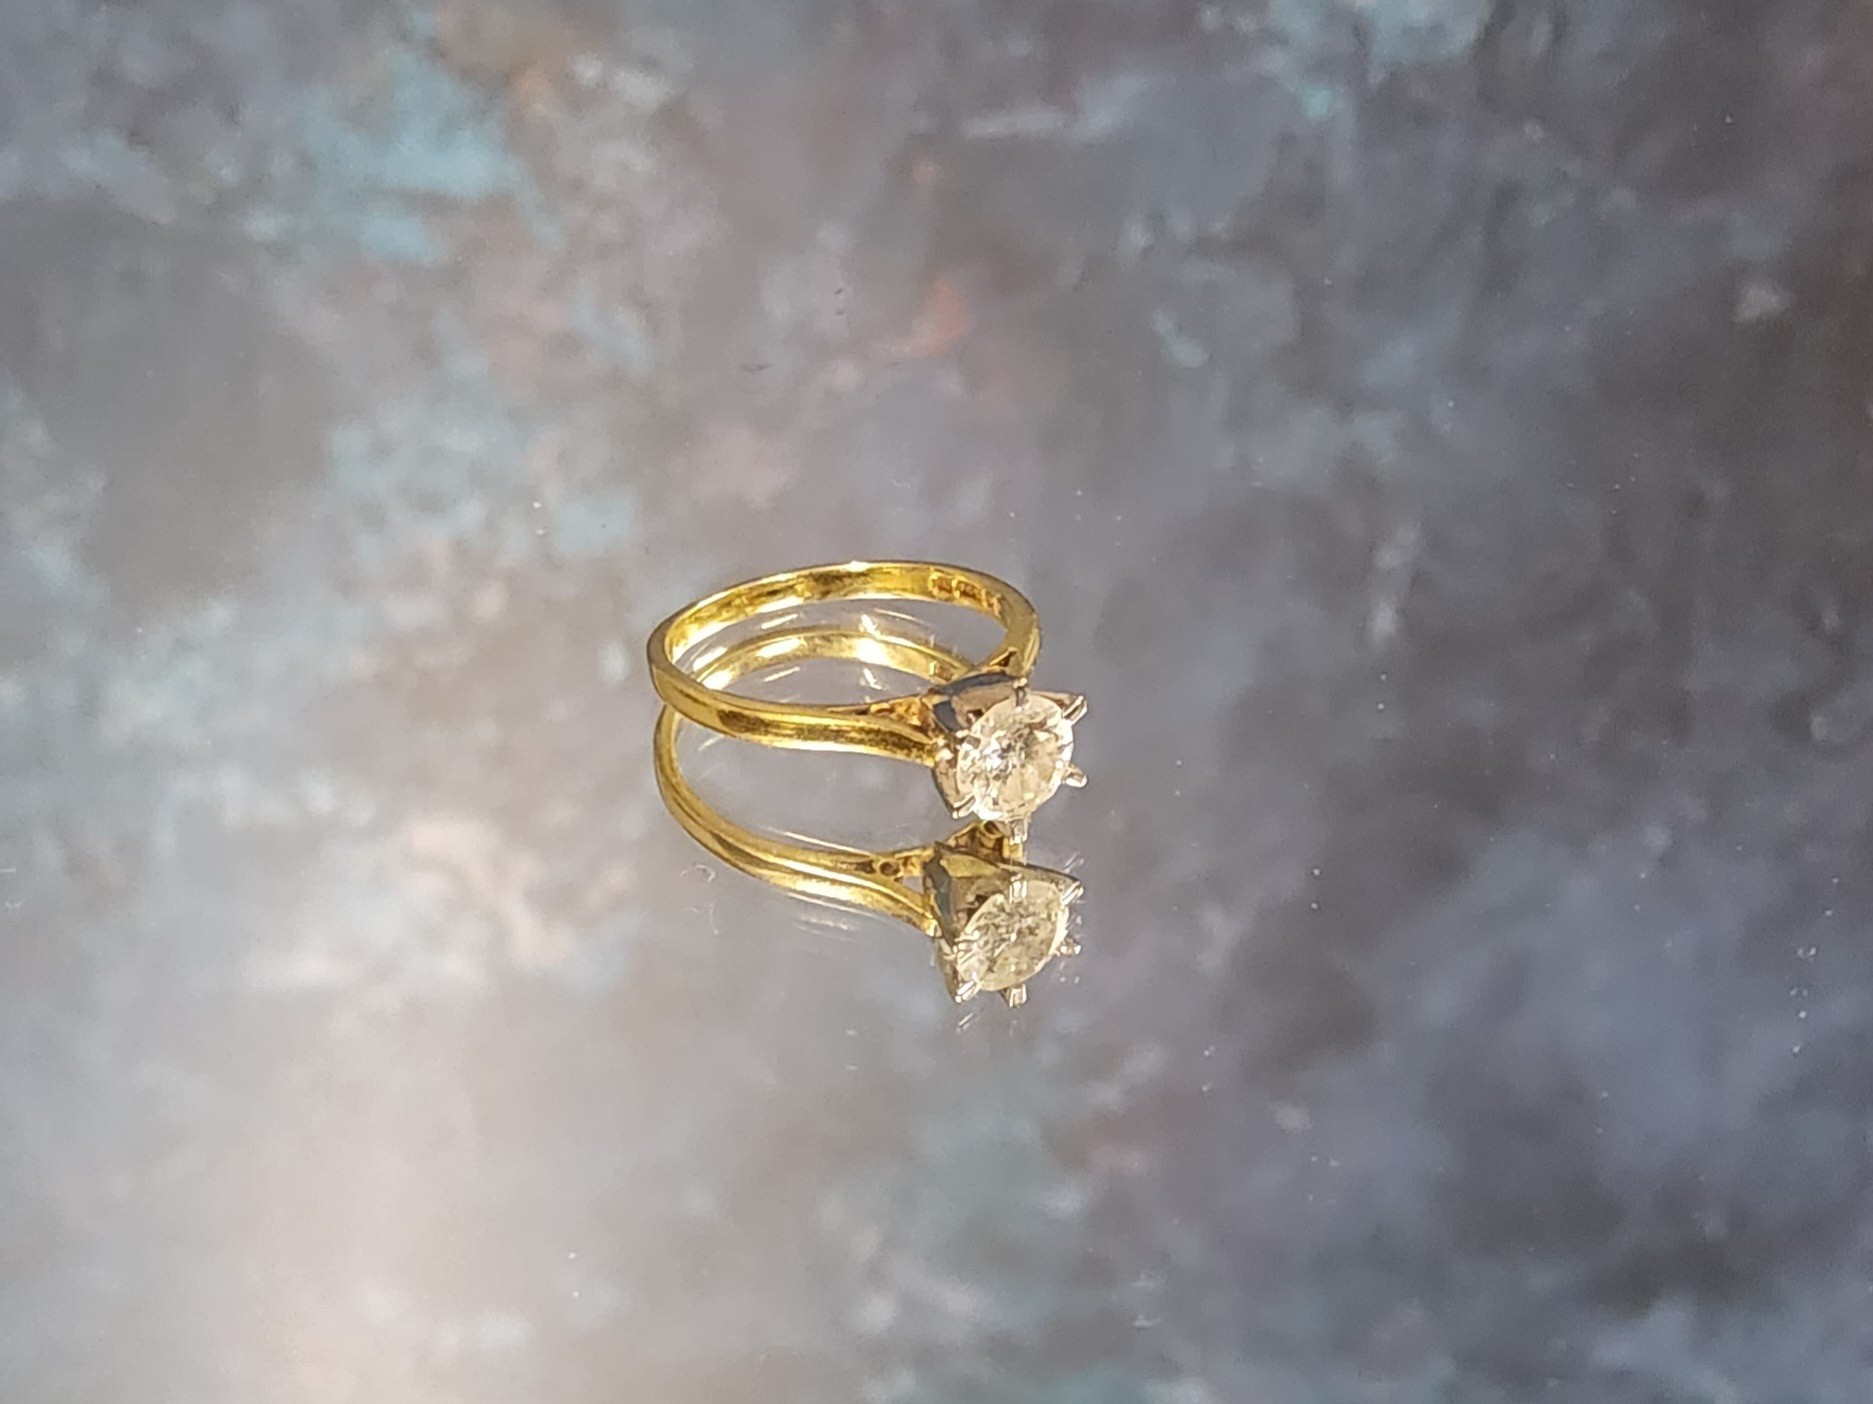 Amended description & estimate - An 18ct gold diamond solitaire ring, the claw set brilliant cut